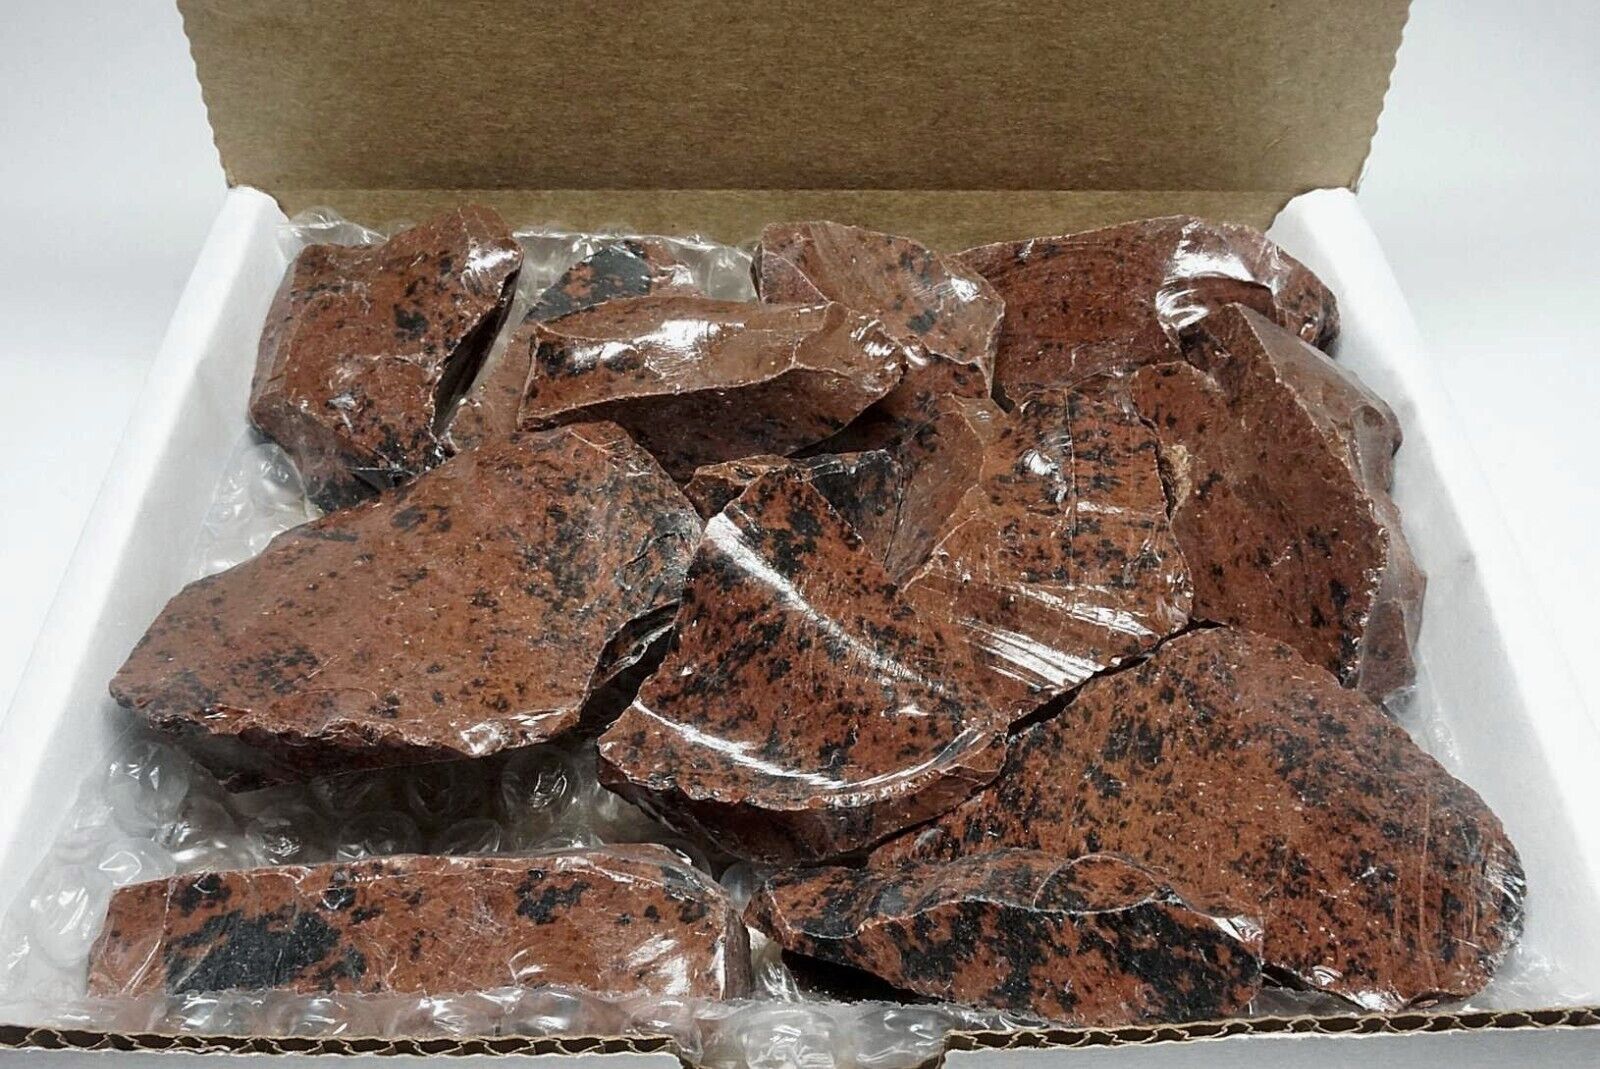 Mahogany Obsidian 1 Lb Box Natural Brown Black Crystal Chunks Volcanic Glass